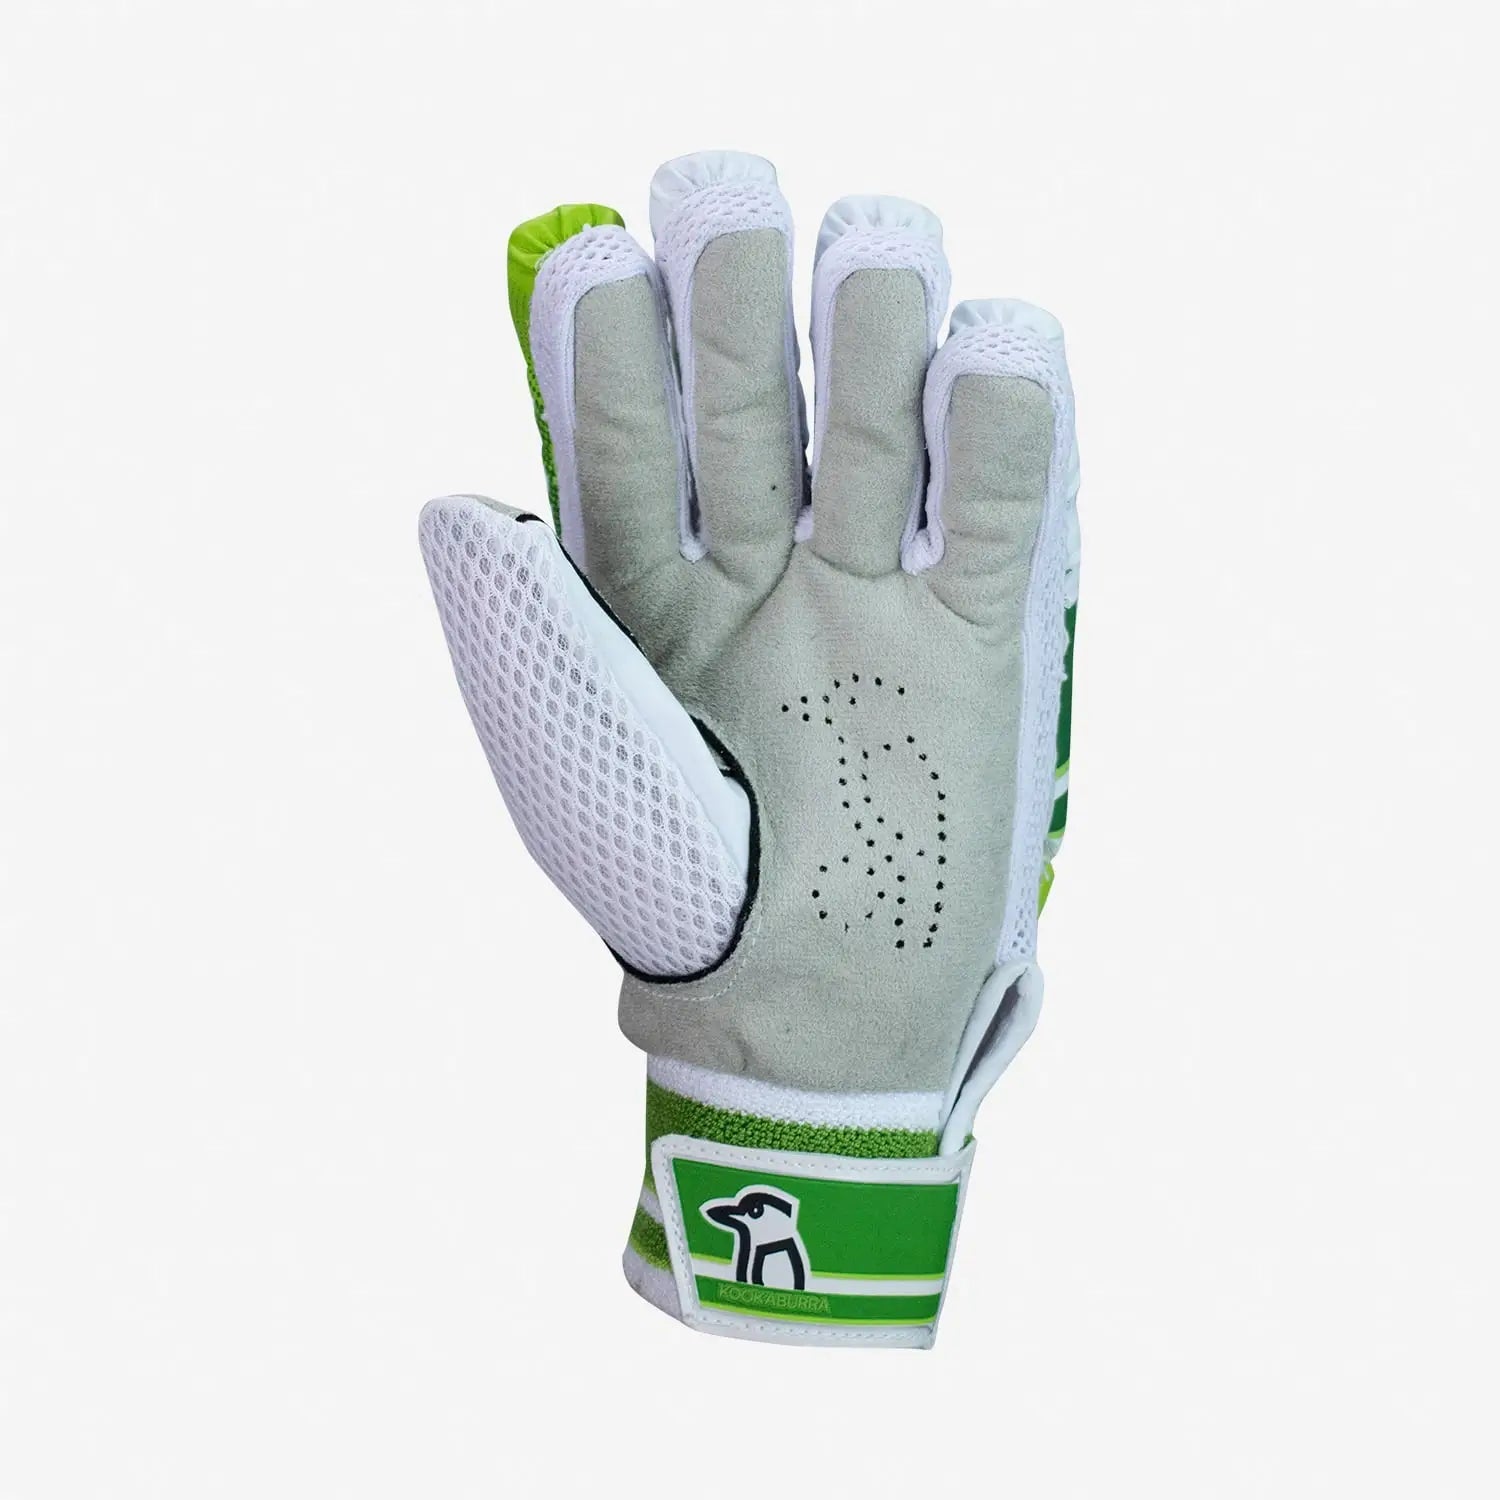 Kookaburra Kahuna 5.1 Cricket Batting Gloves ‘Max Flo’ Ventilation - GLOVE - BATTING